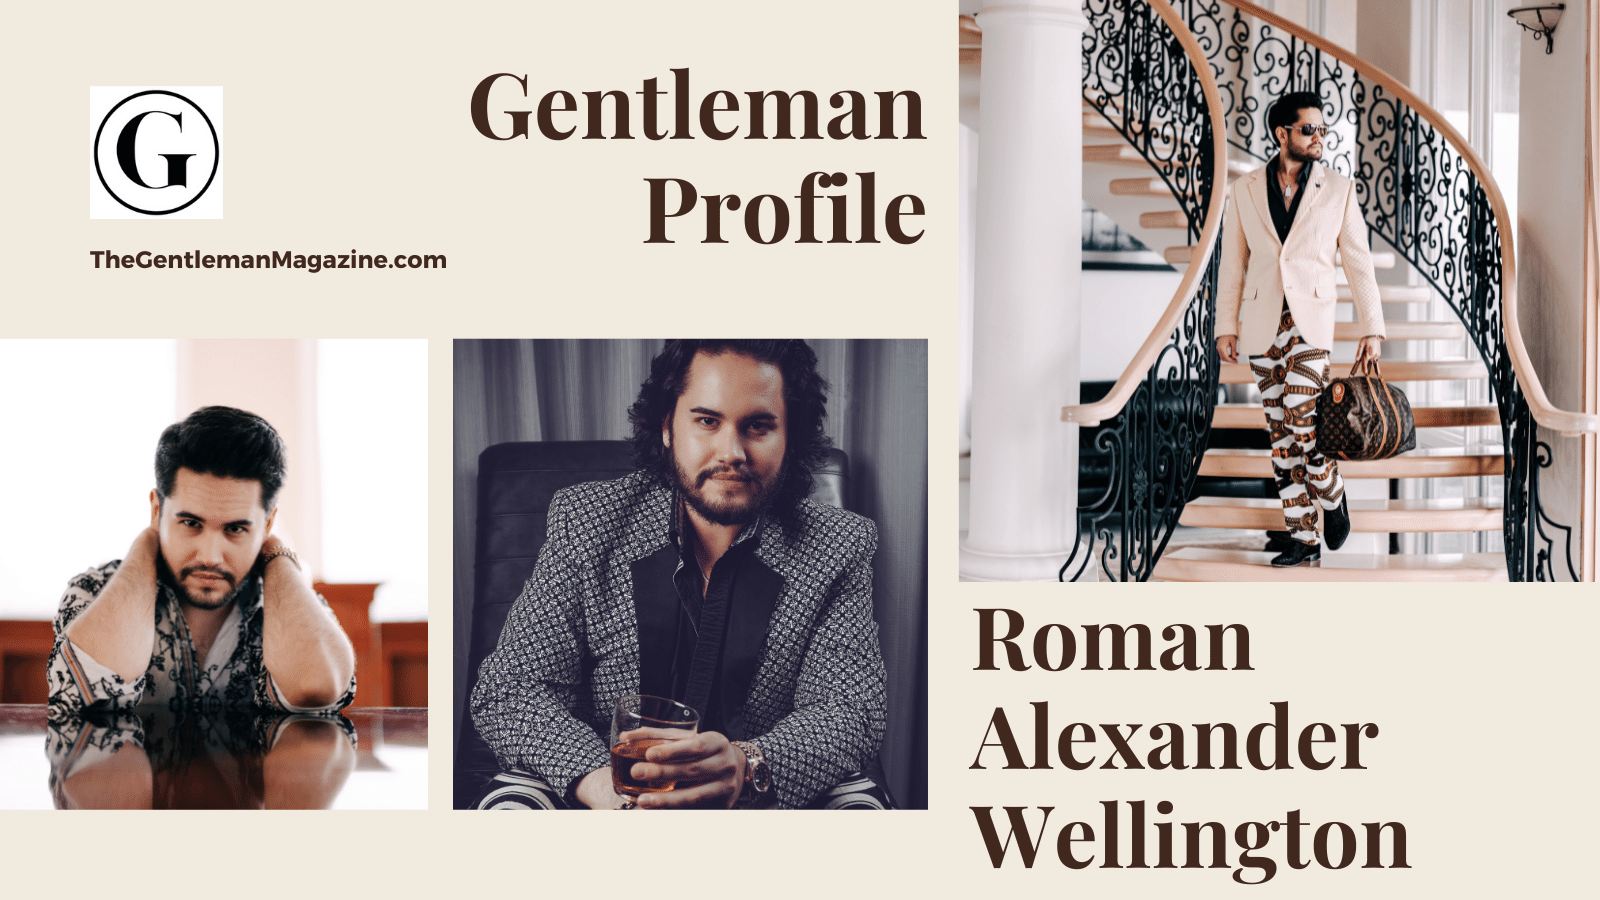 Roman Alexander Wellington - The Gentleman Magazine Profile